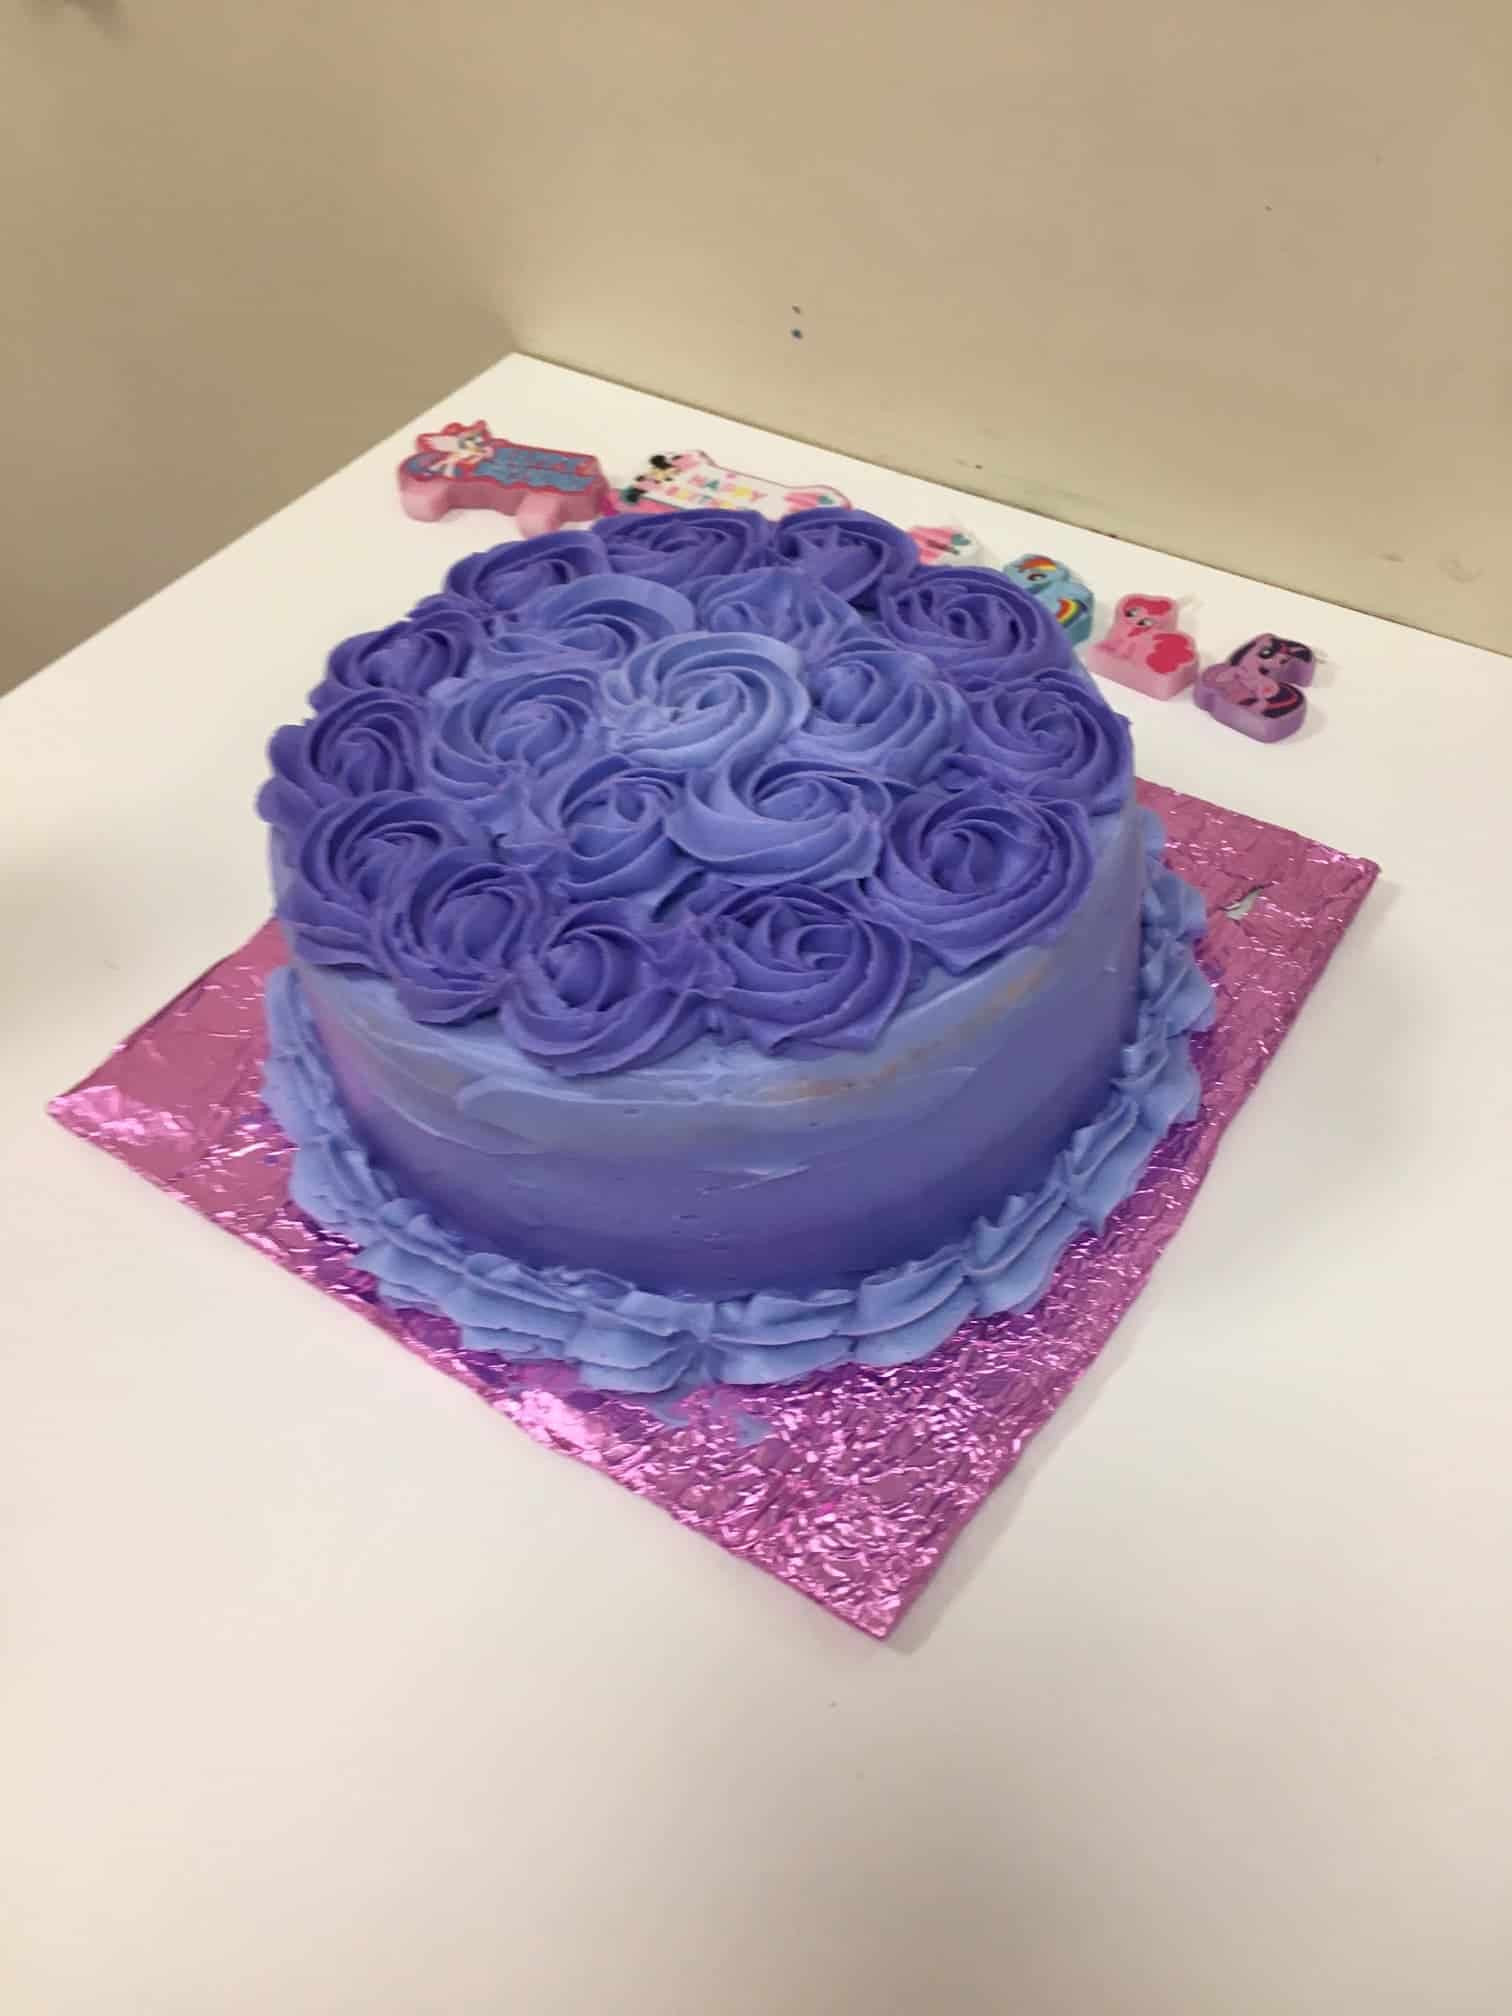 Purple Birthday Cakes
 "Purple" birthday cake i am baker